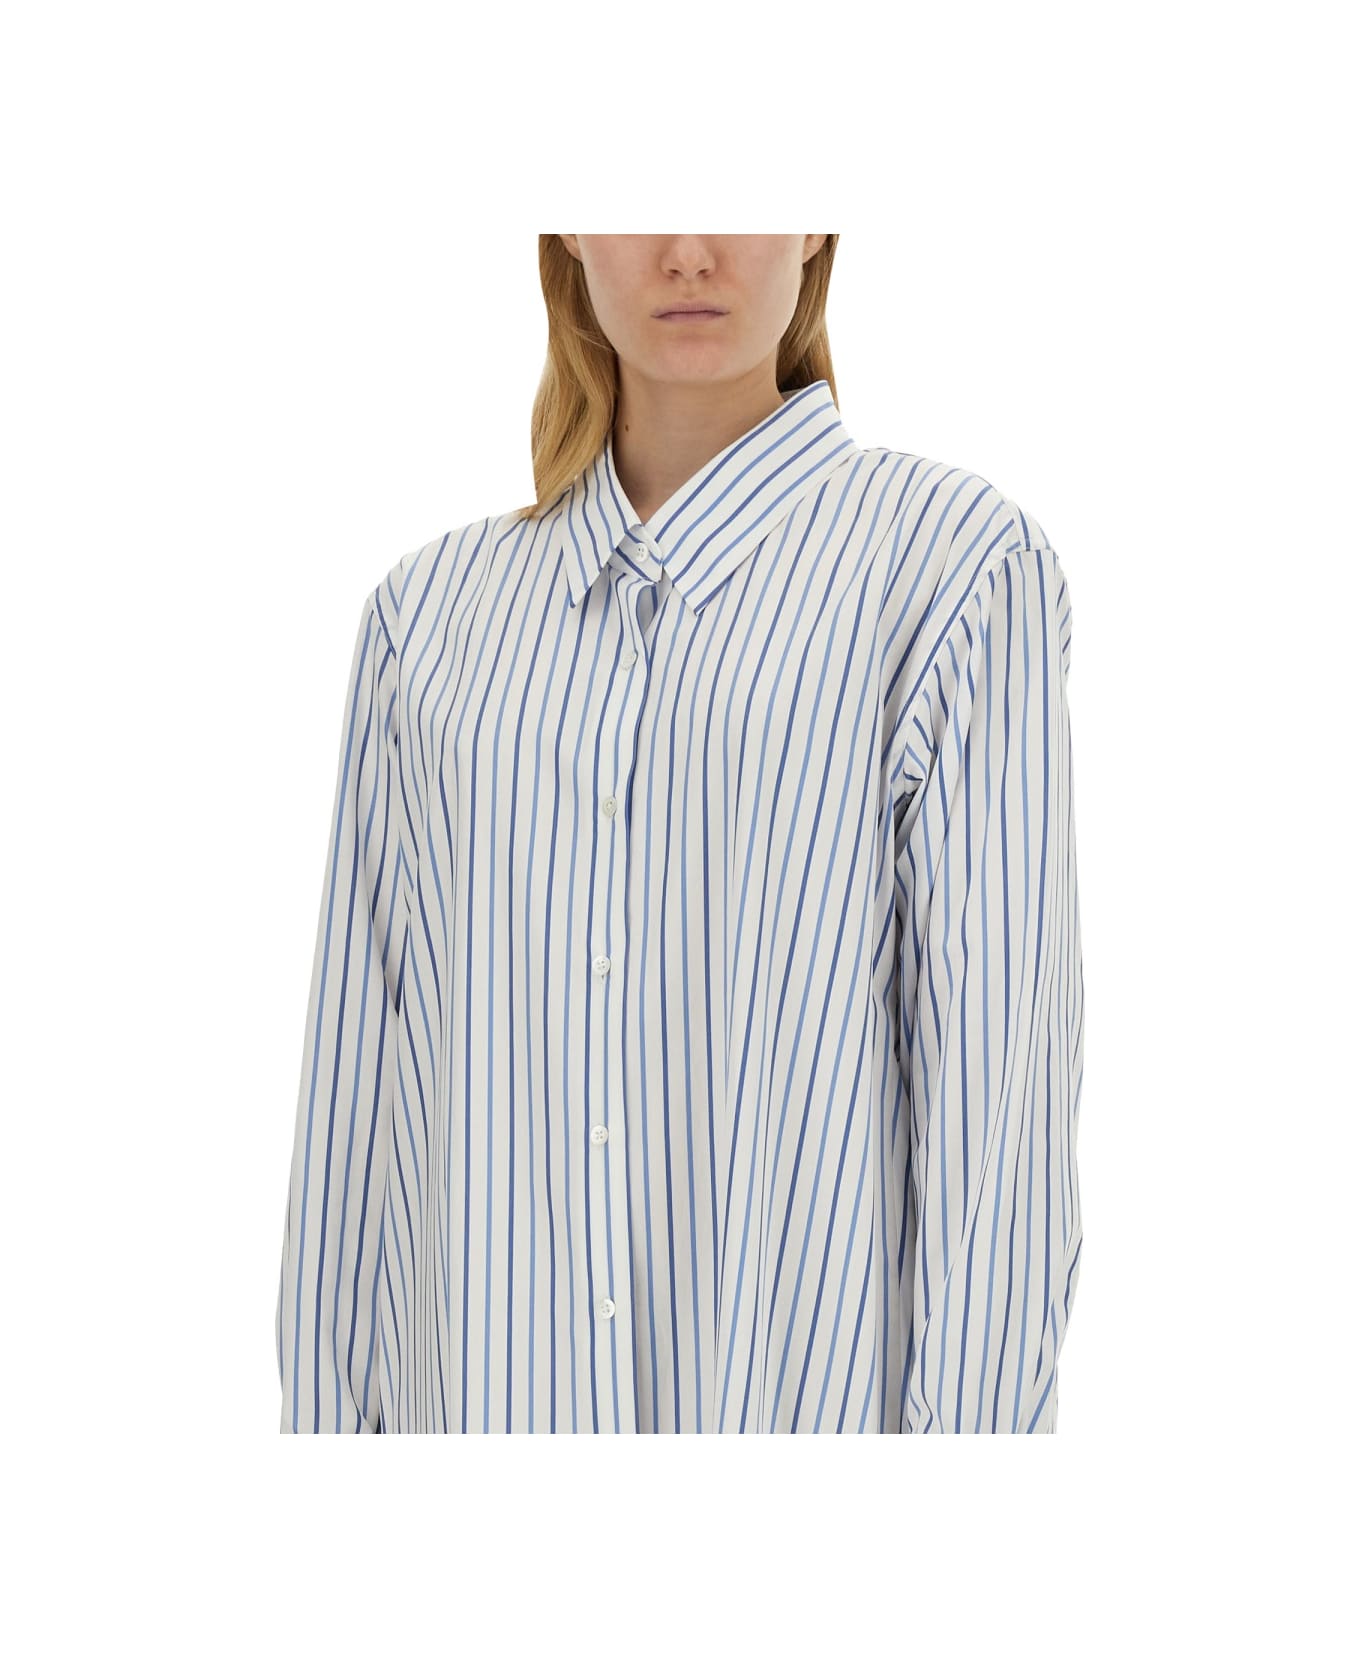 Dries Van Noten Shirt With Stripe Pattern - MULTICOLOUR